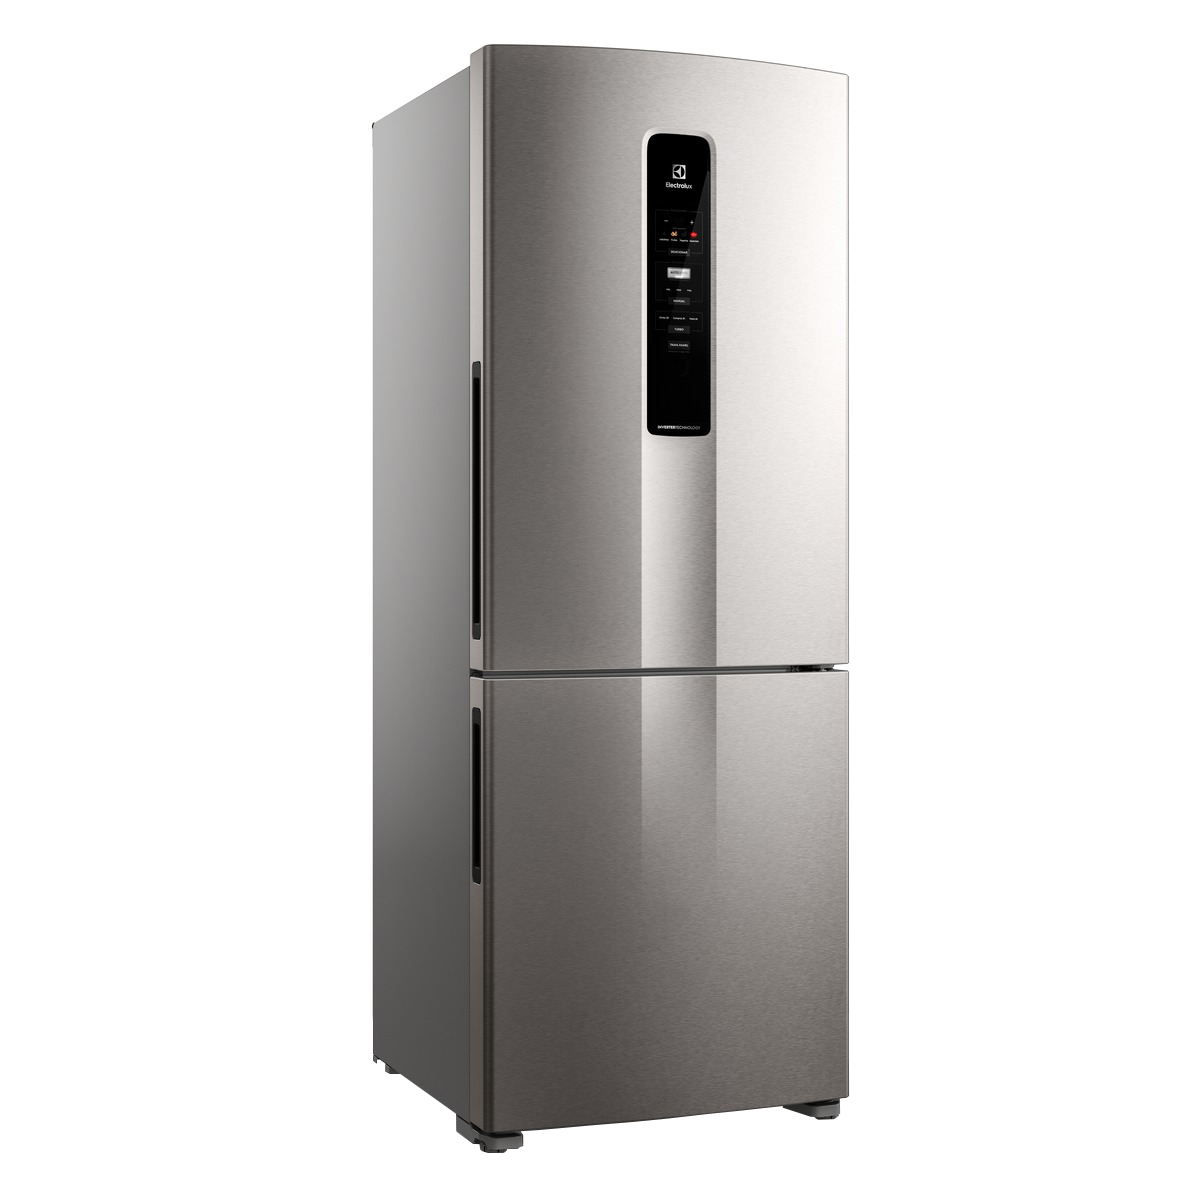 Geladeira Refrigerador Electrolux 490L Frost Free Bottom Freezer Duplex Ib7s - Inox - 110 Volts